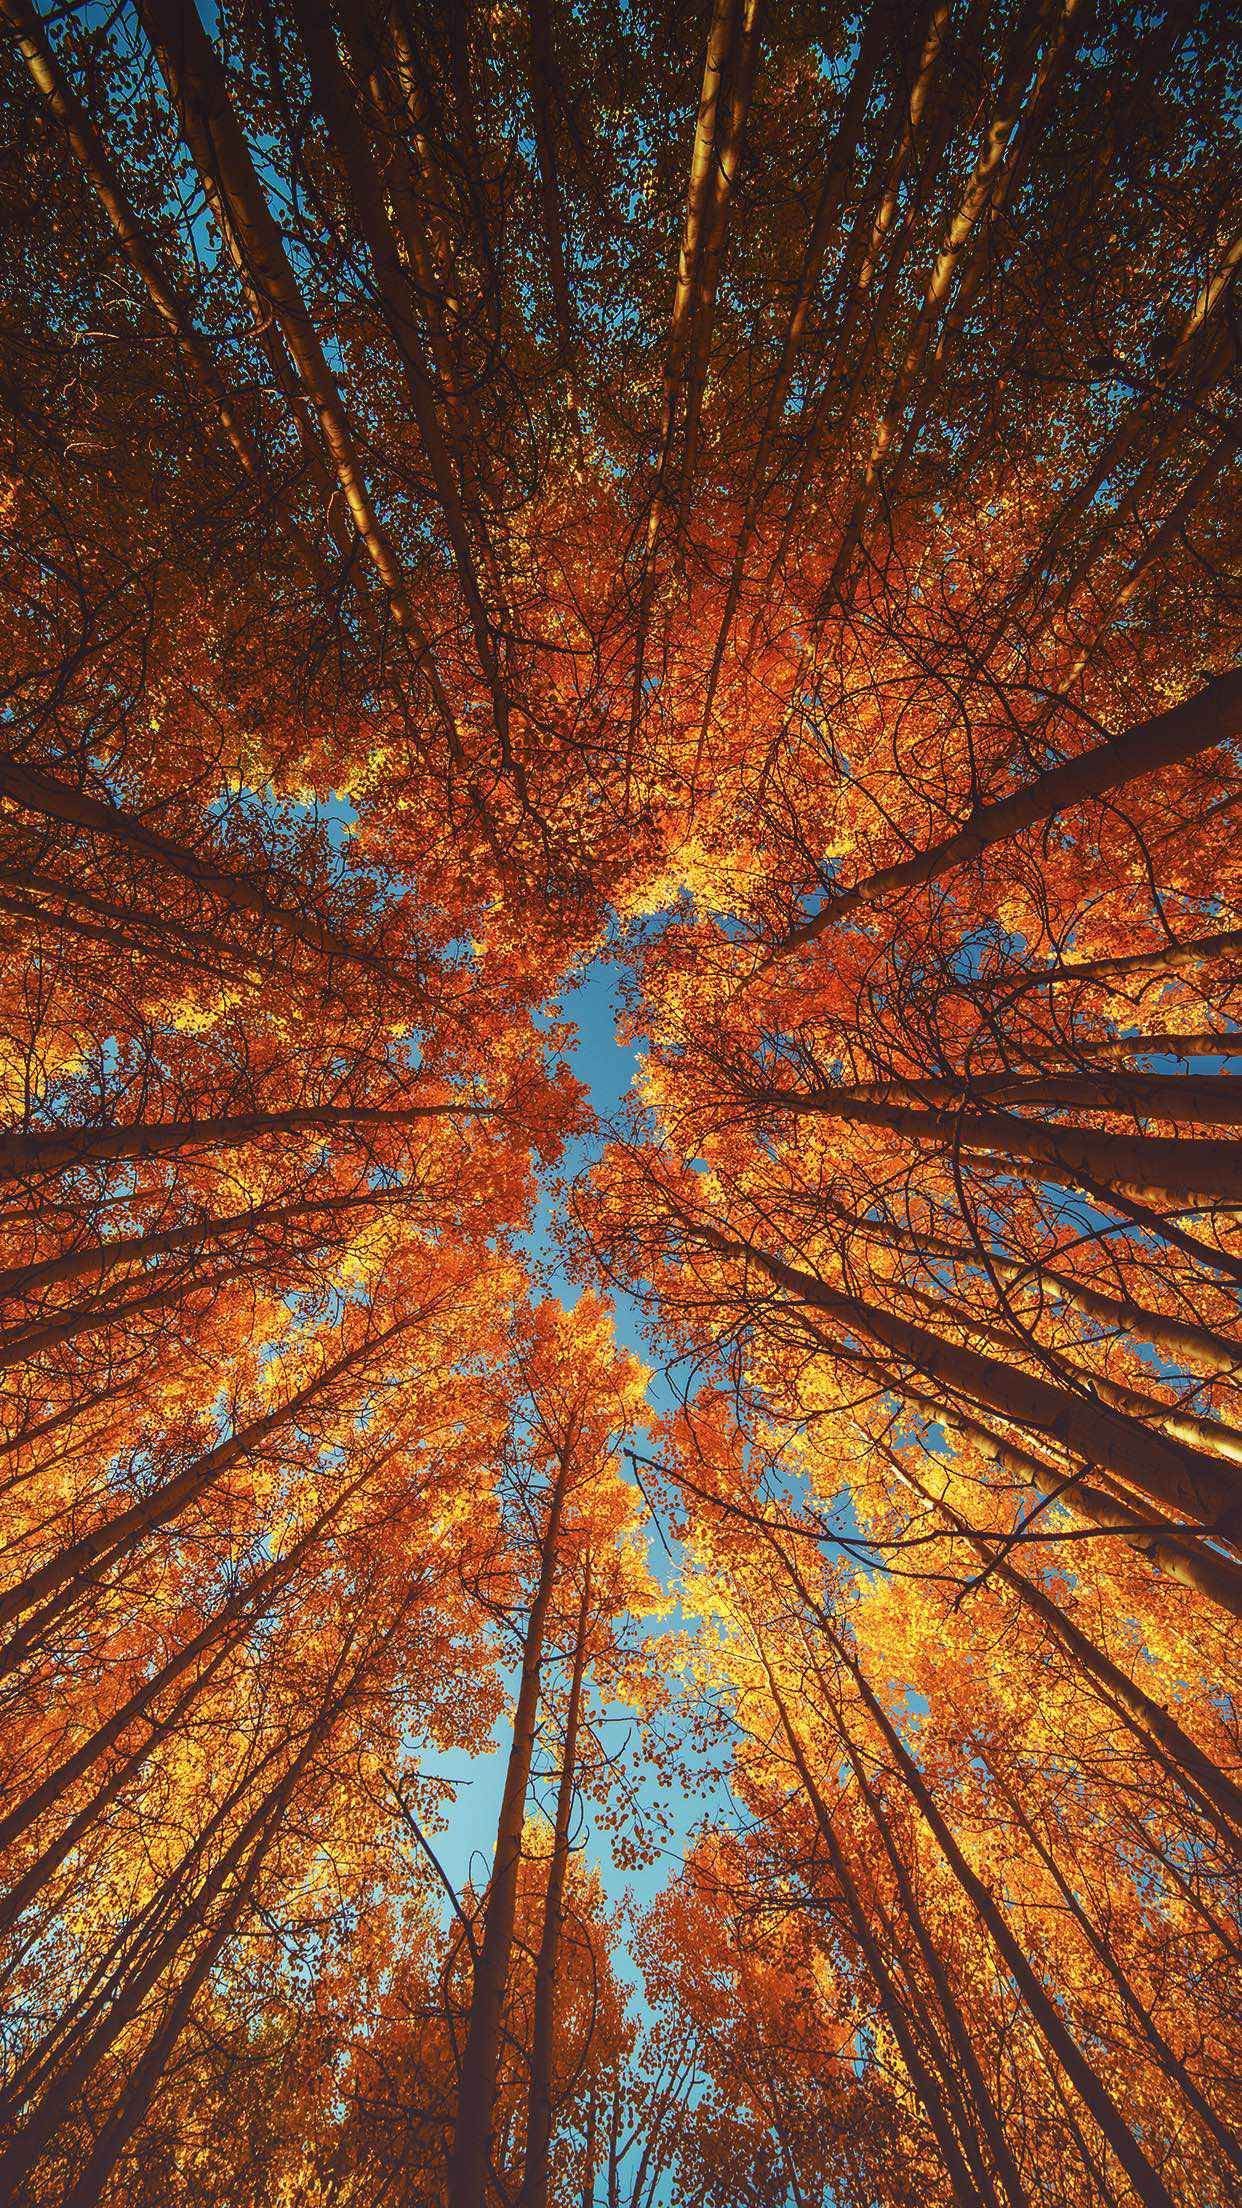 iphone x autumn background